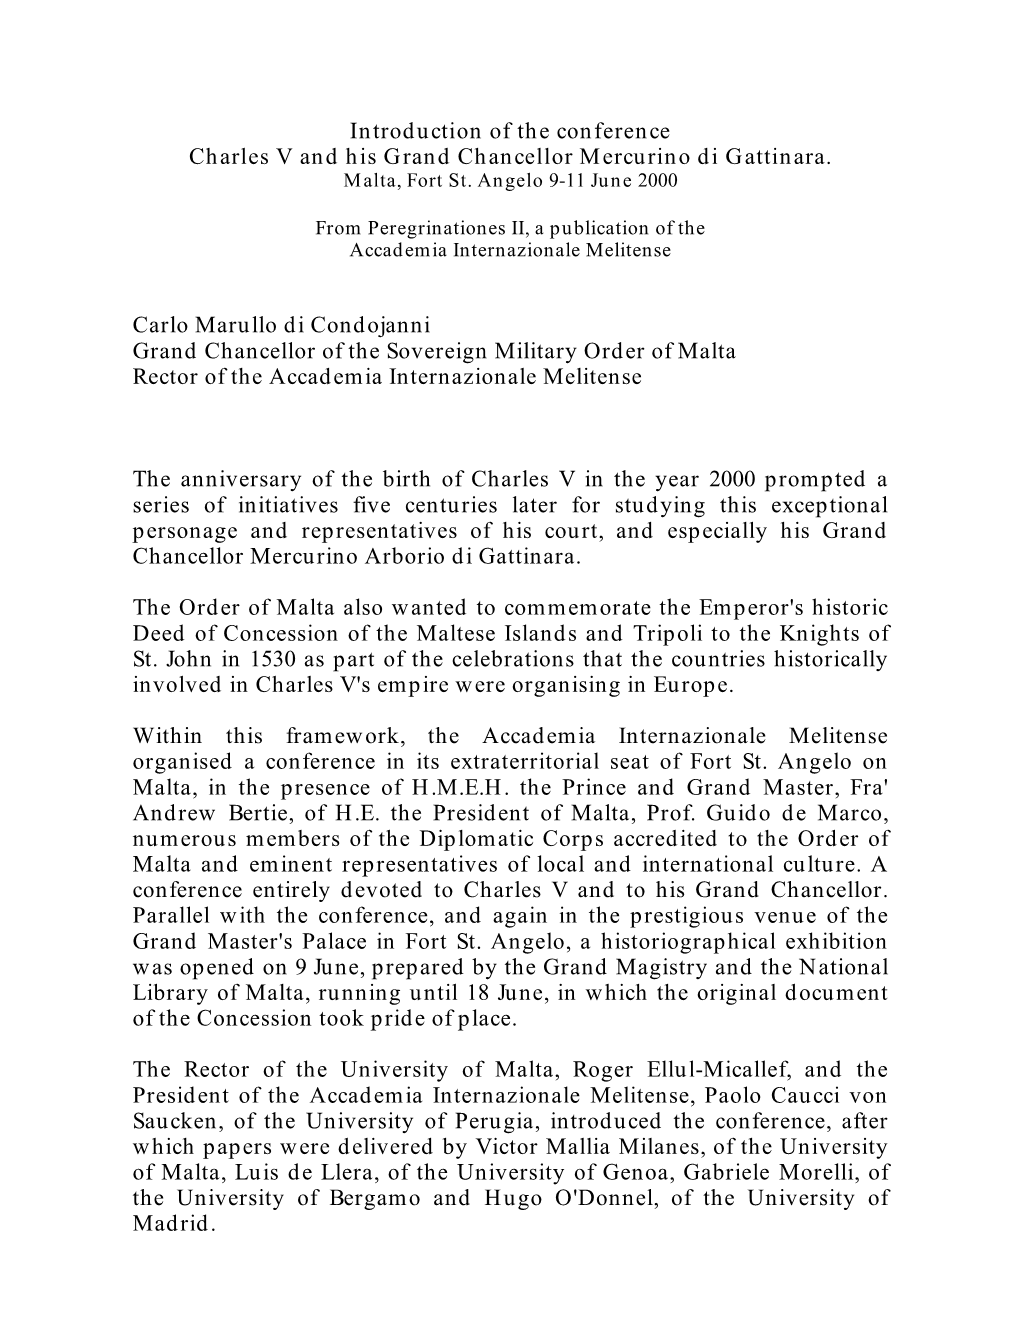 Introduction of the Conference Charles V and His Grand Chancellor Mercurino Di Gattinara. Malta, Fort St